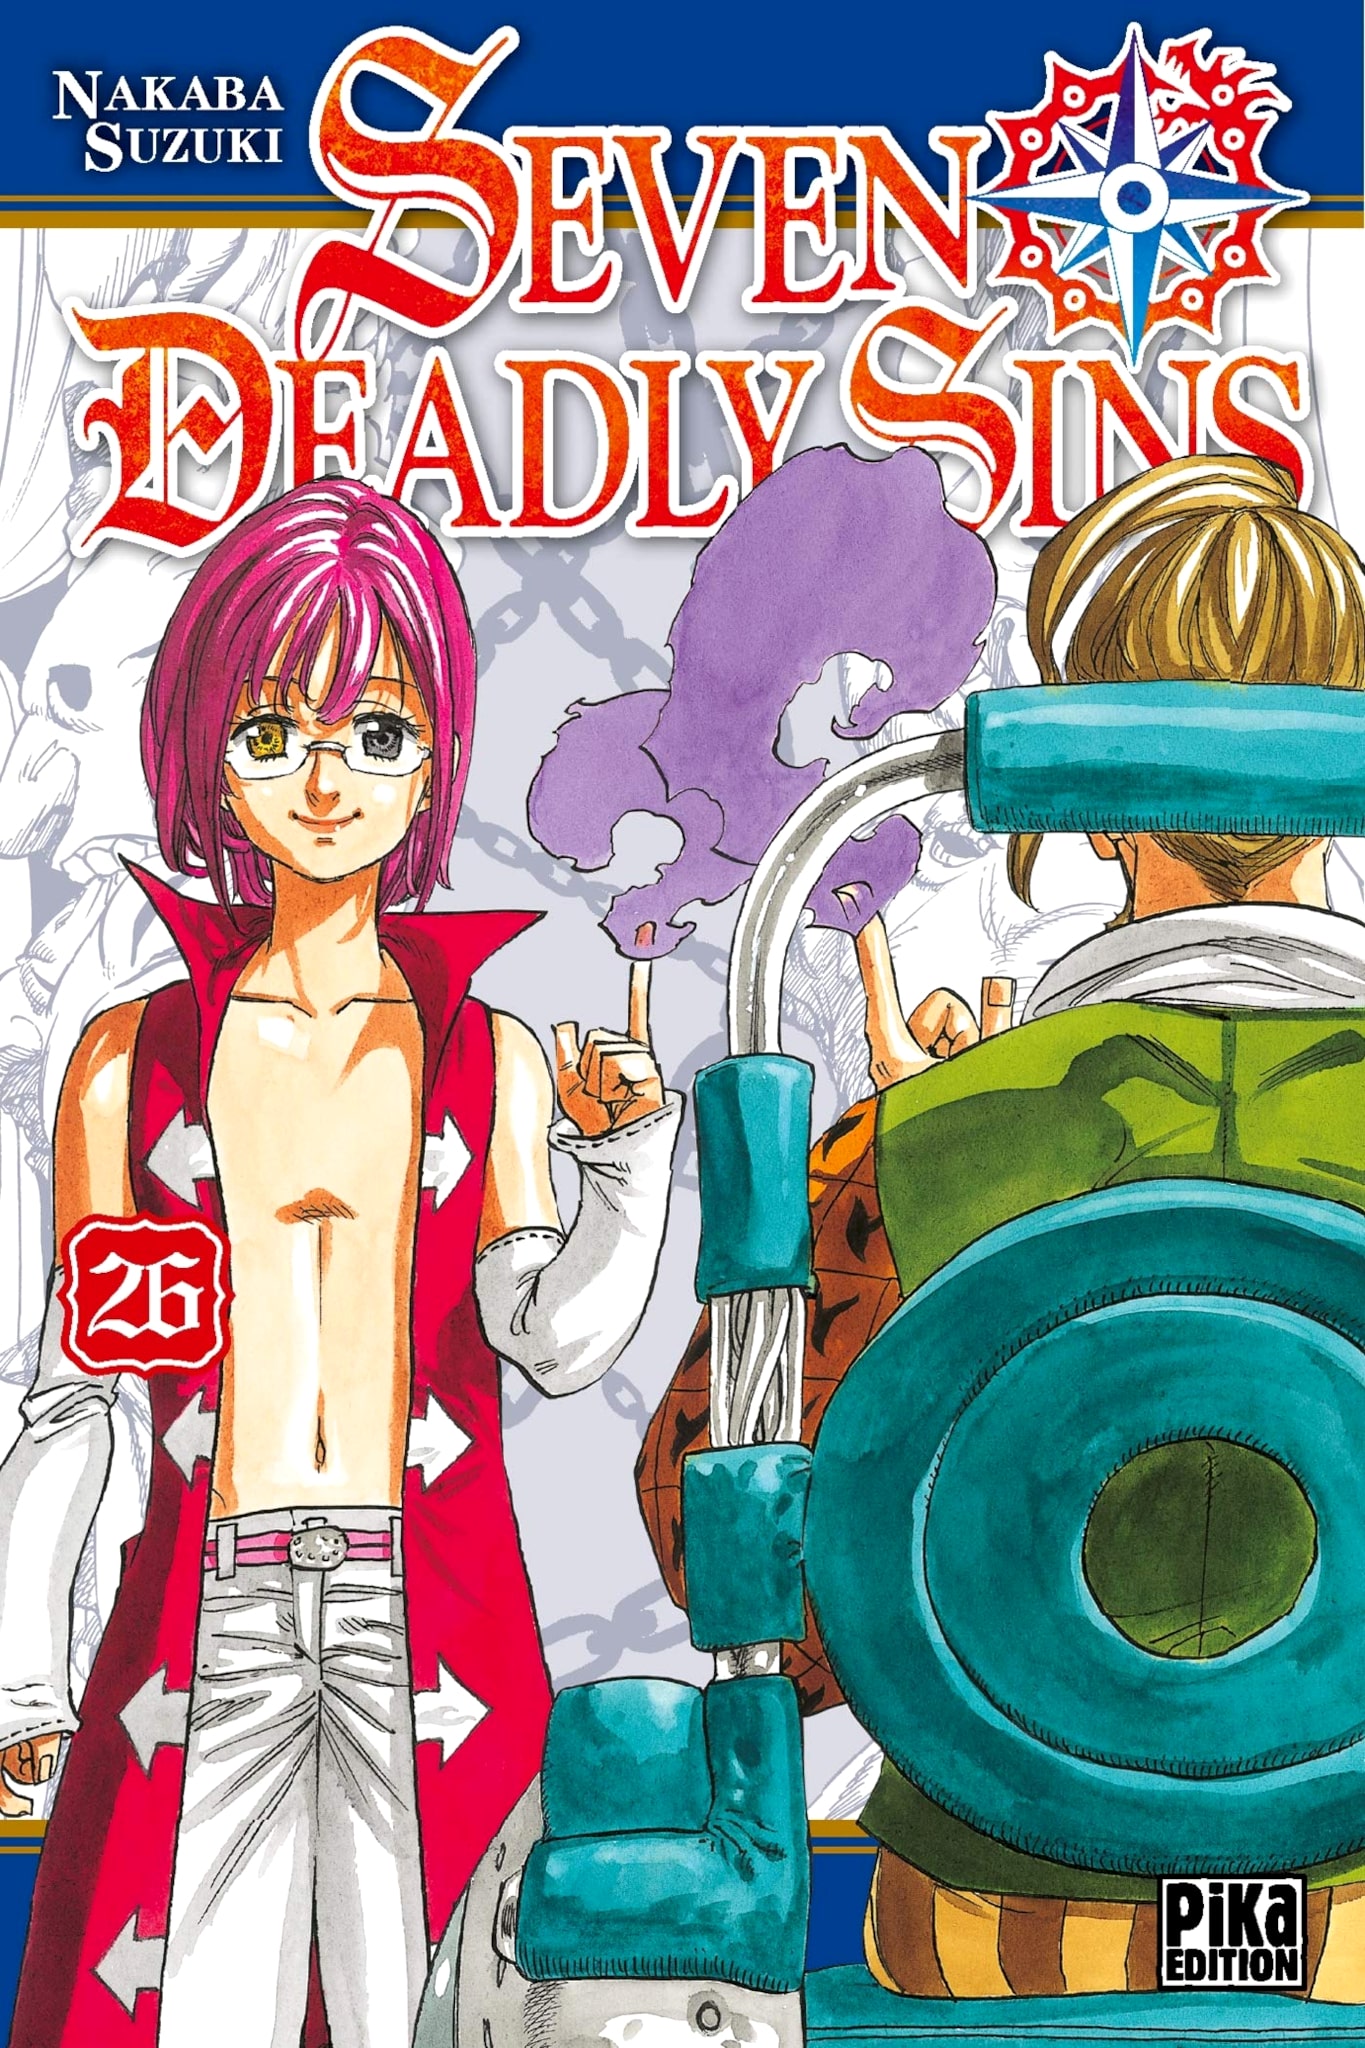 Tome 26 du manga The Seven Deadly Sins